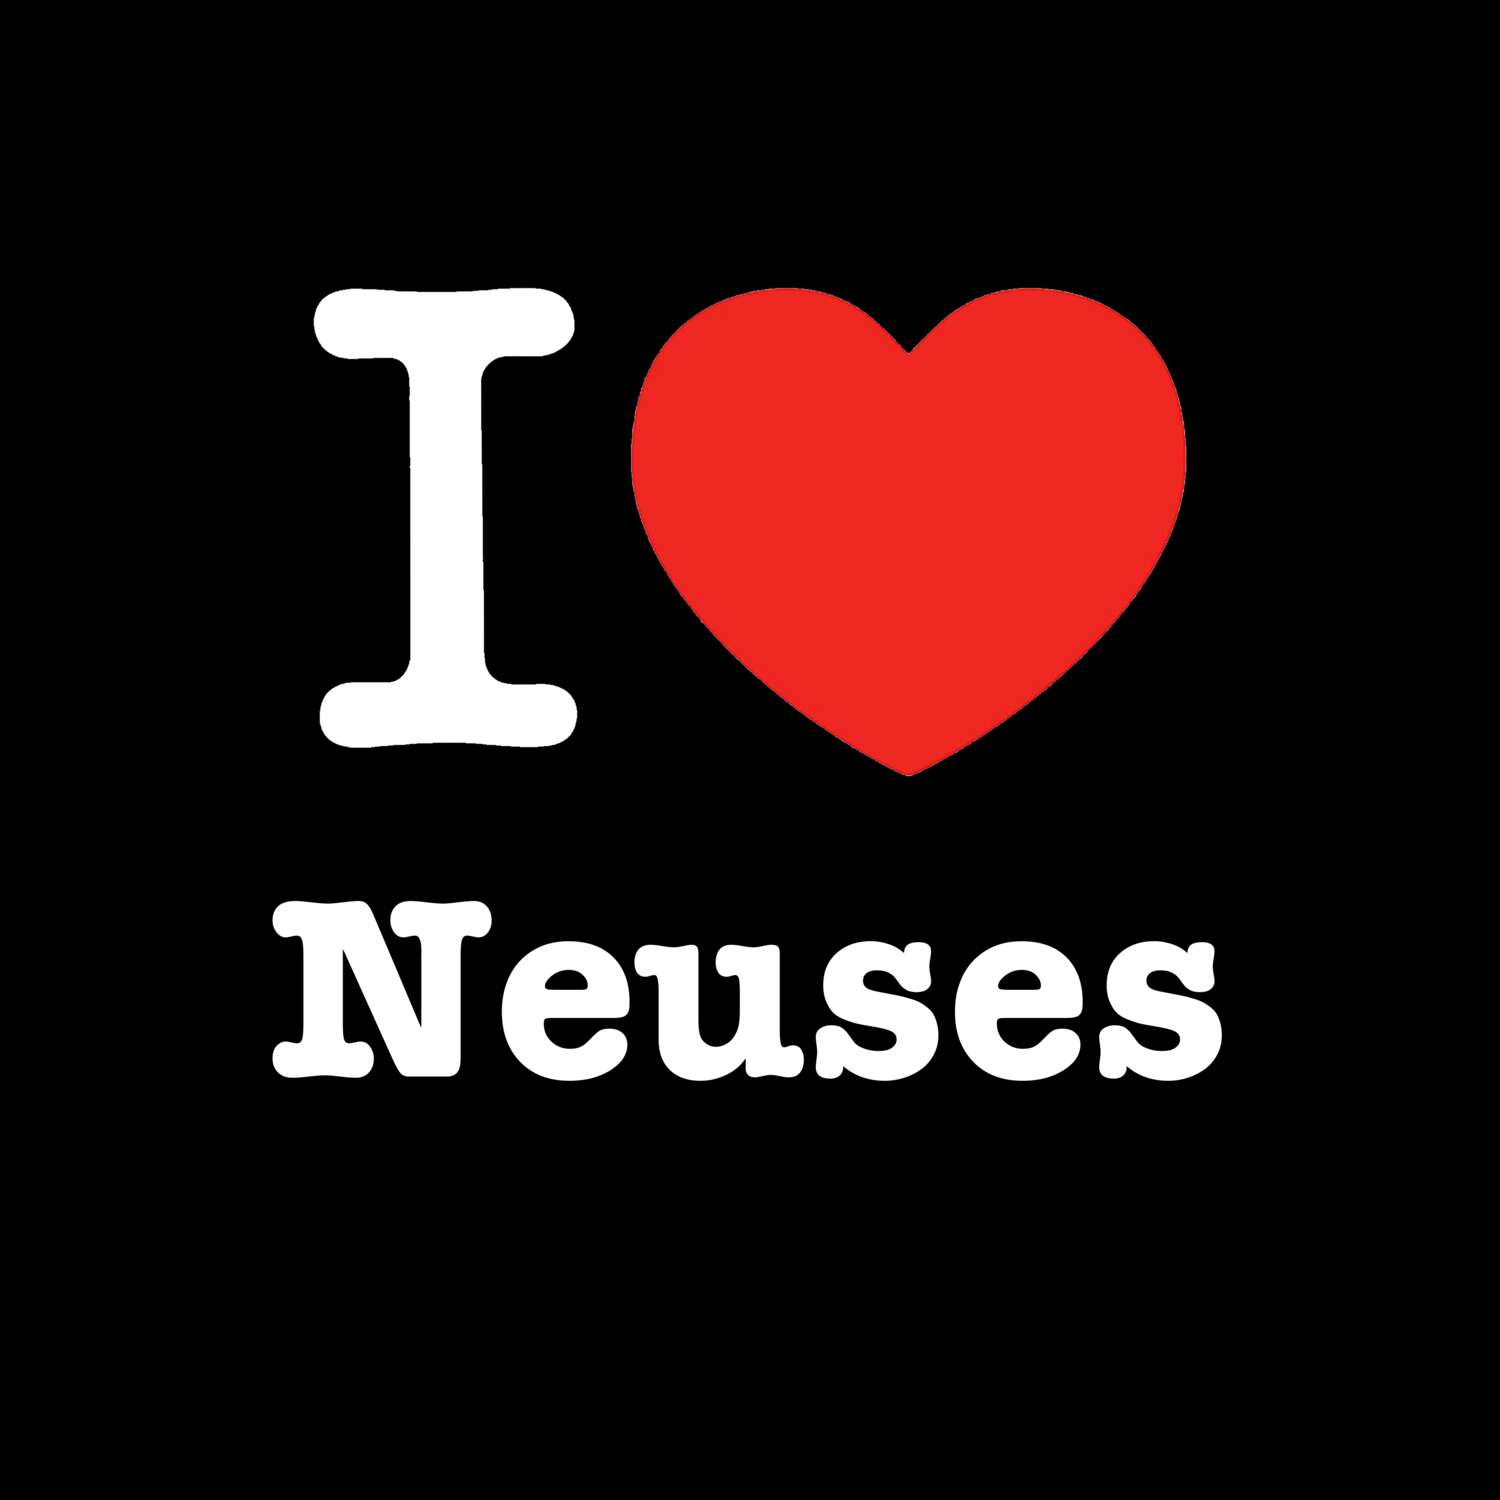 Neuses T-Shirt »I love«